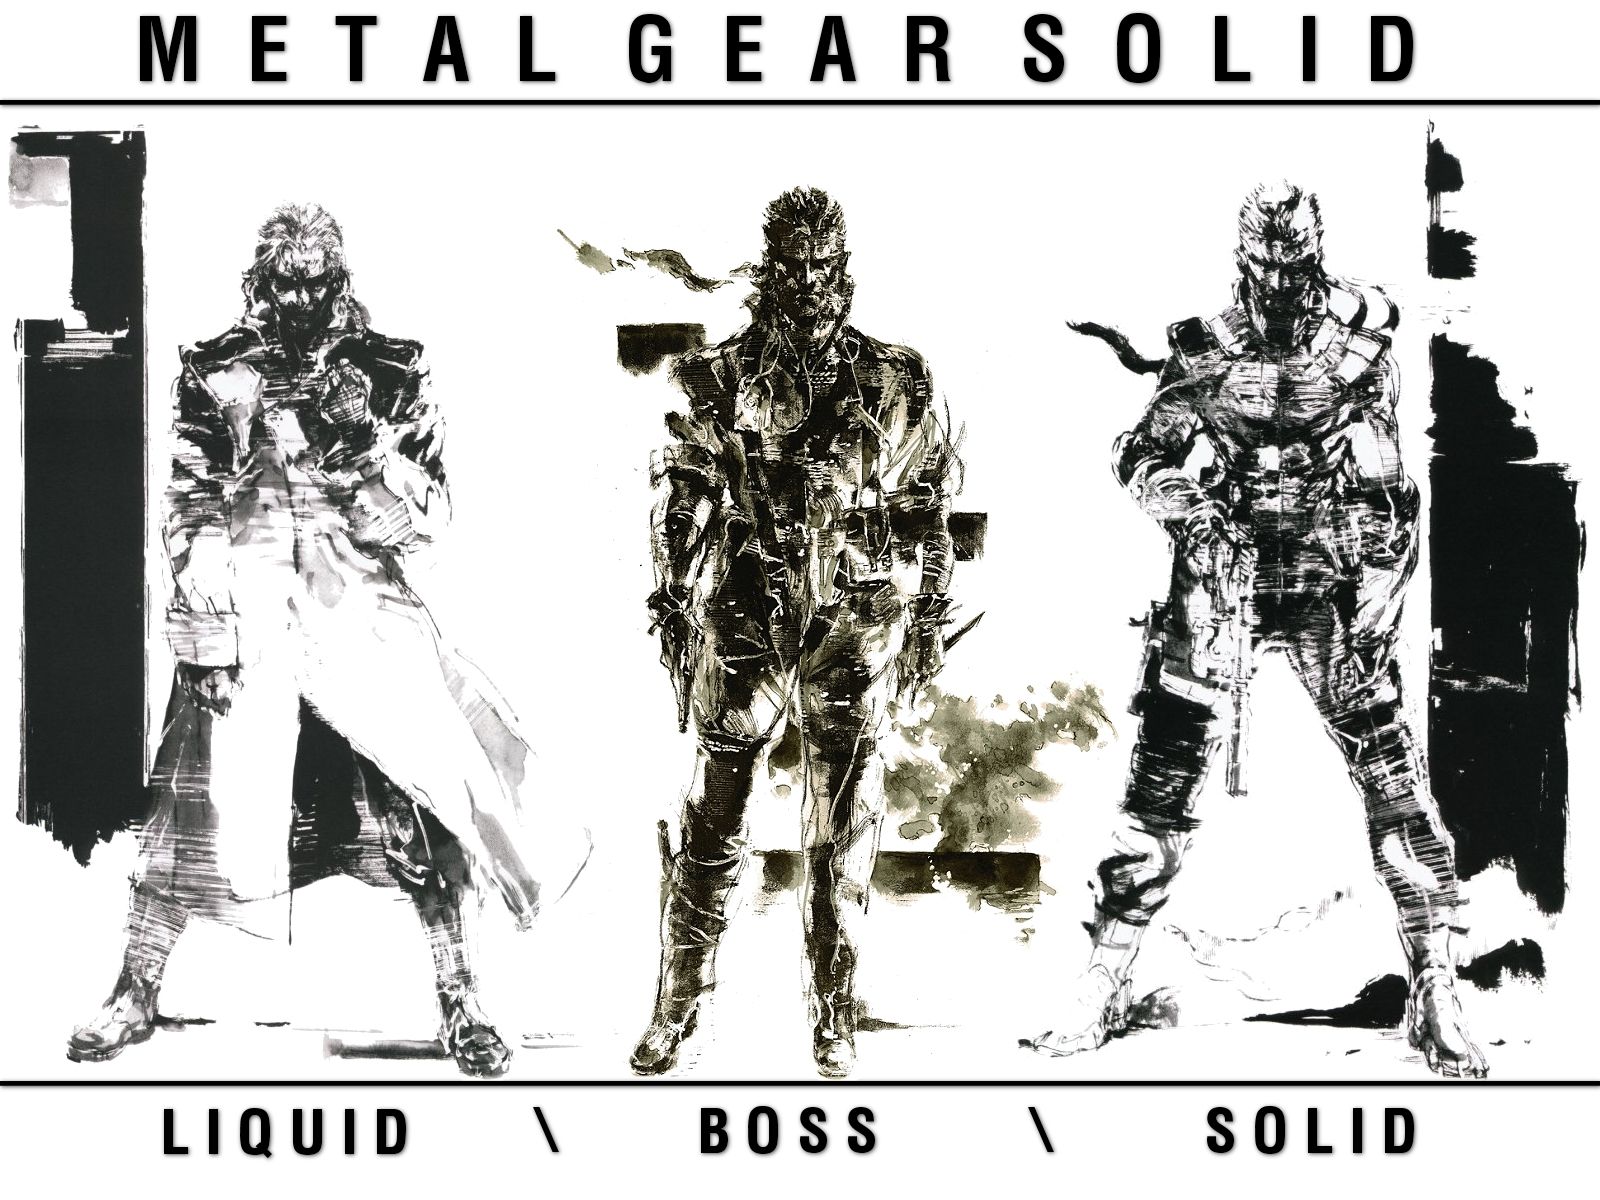 metal gear solid, metal gear, video game images